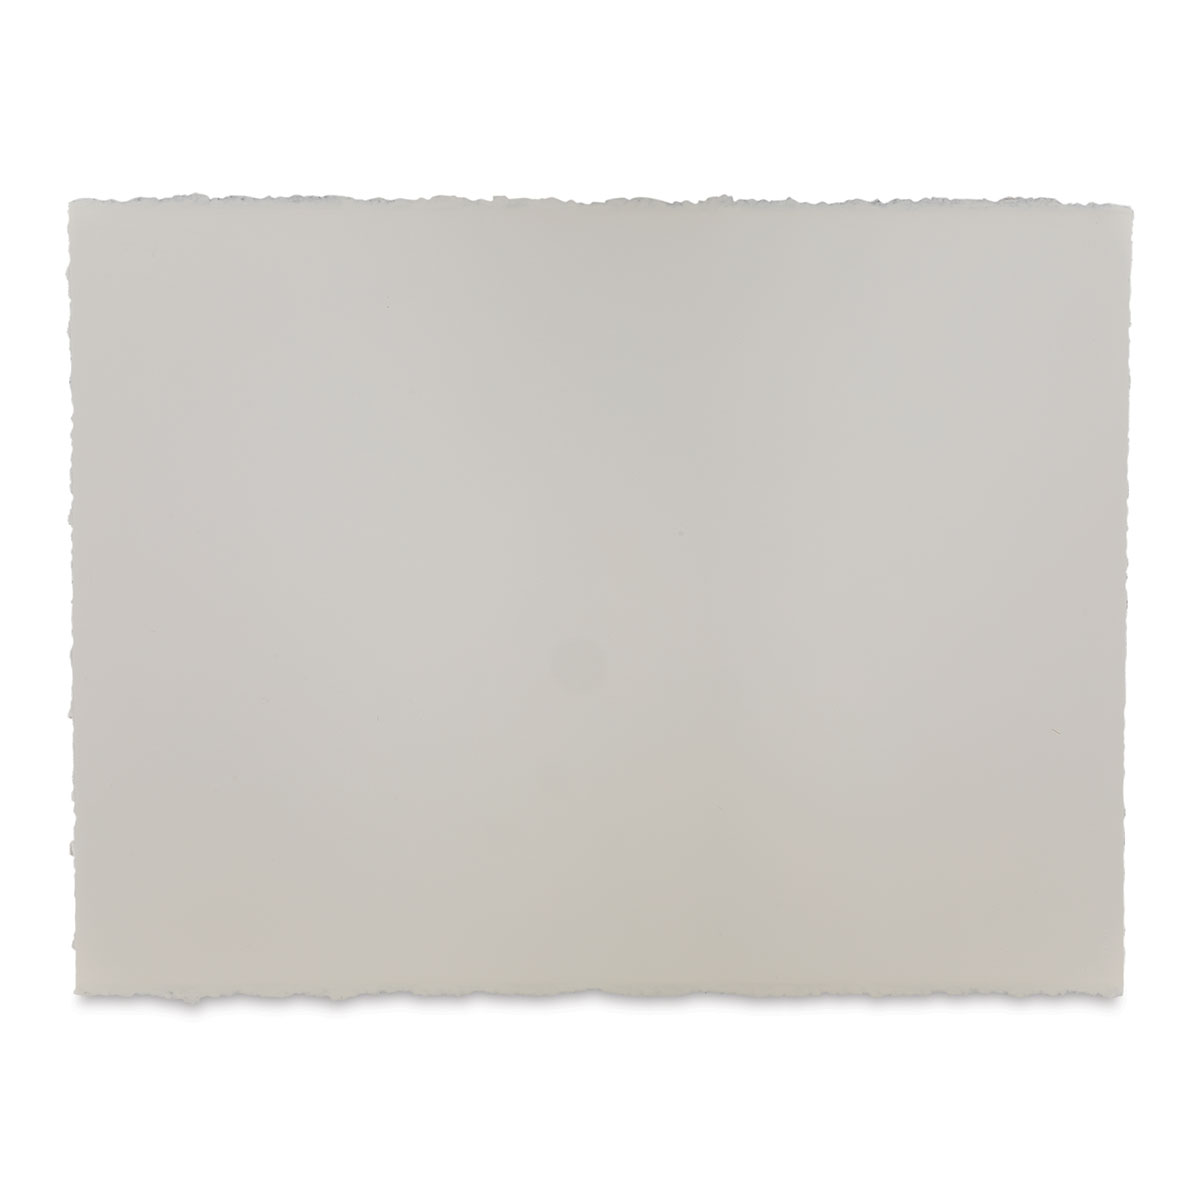 22 x 30 300 lb. -640g Hot Press Watercolor Sheets Natural White UPC  Labeled 5-Pack